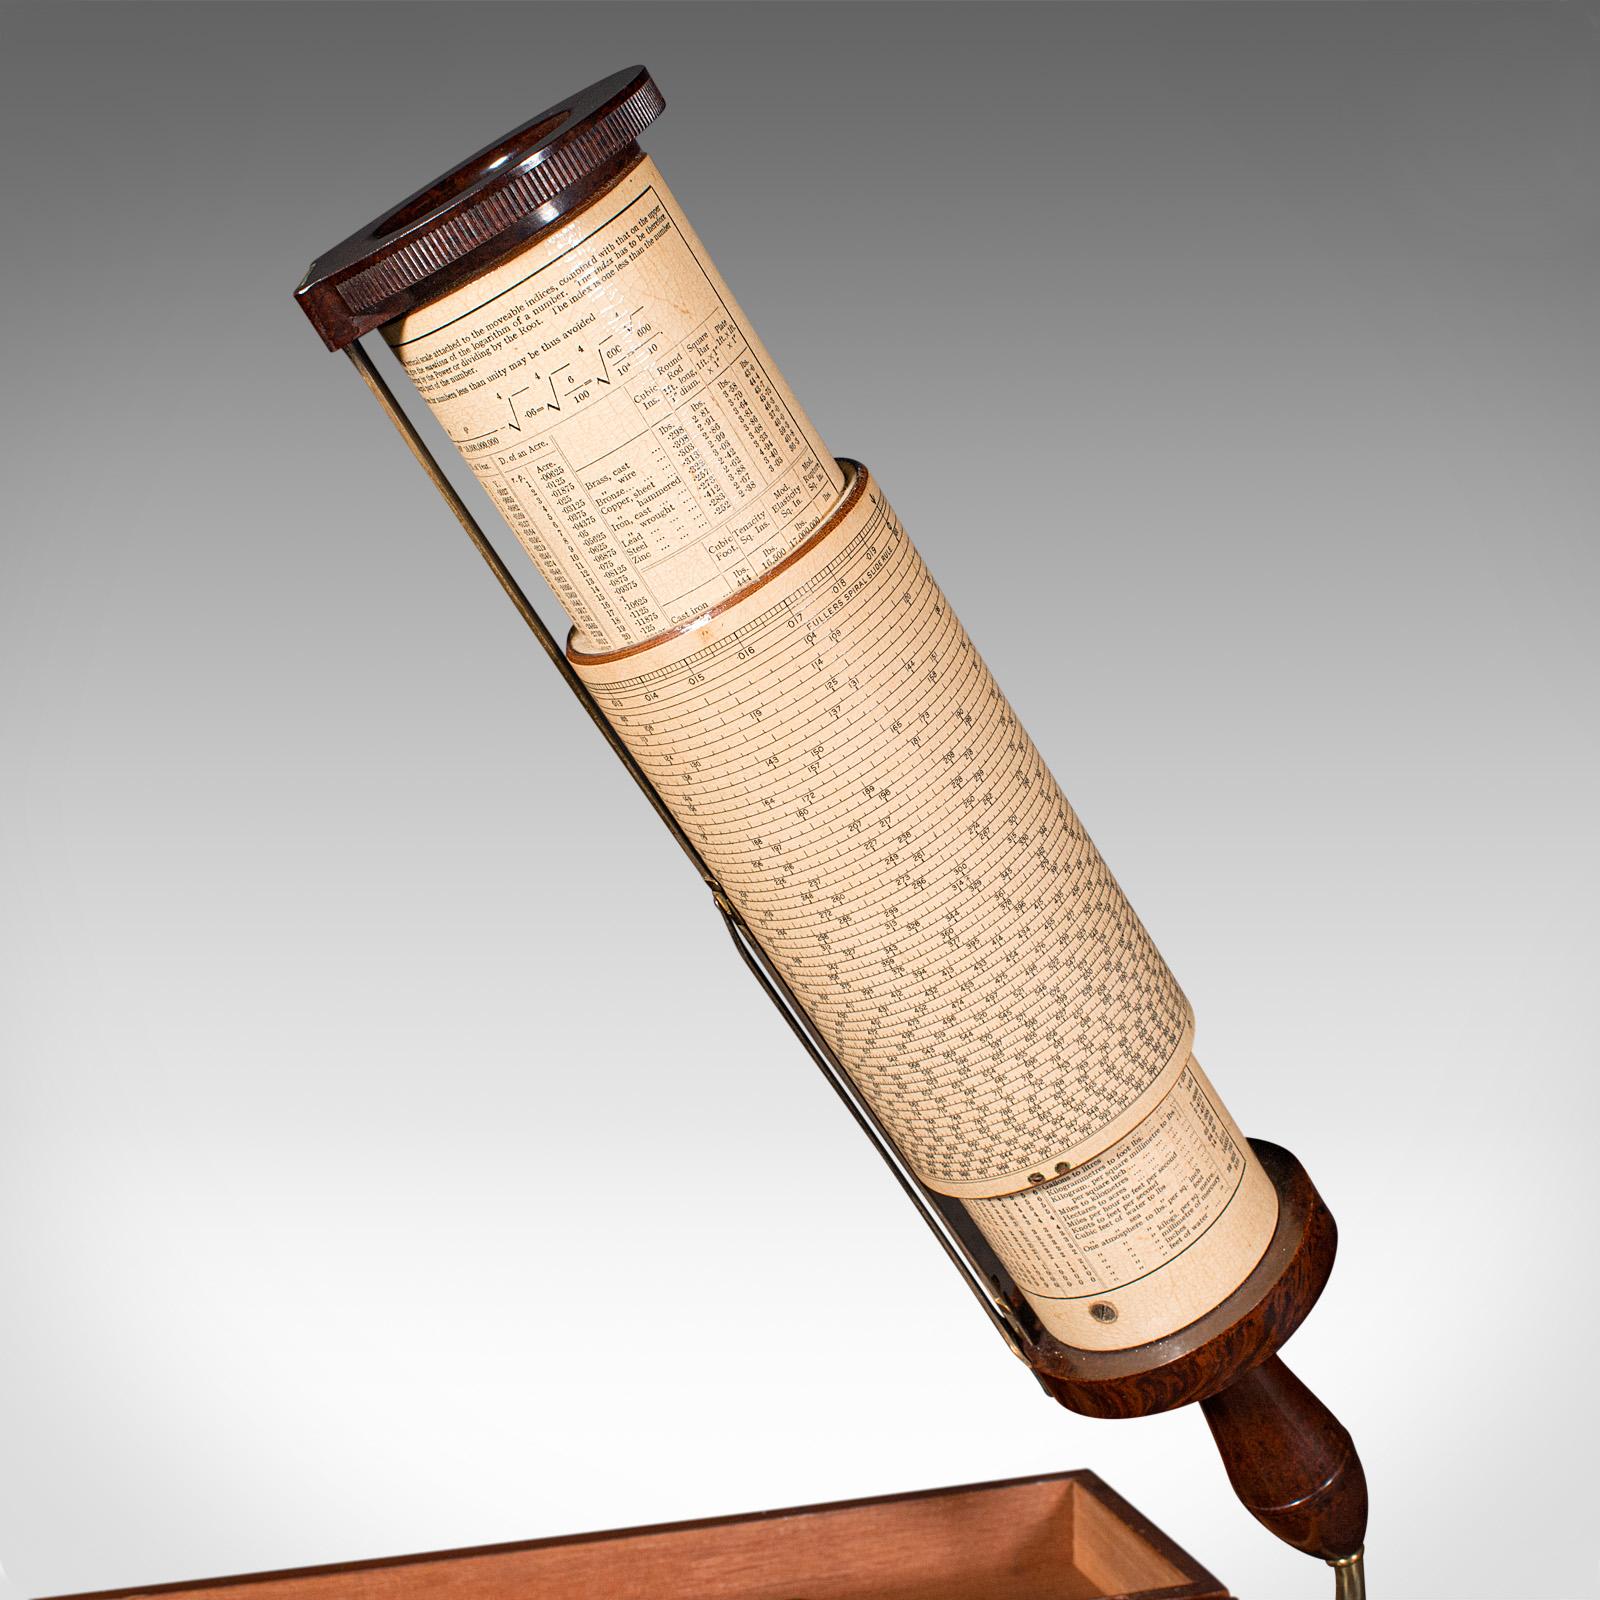 Fuller's Calculator, Englisch, Bakelit, Messing, Mathematik- Instrument im Vintage-Stil (20. Jahrhundert) im Angebot